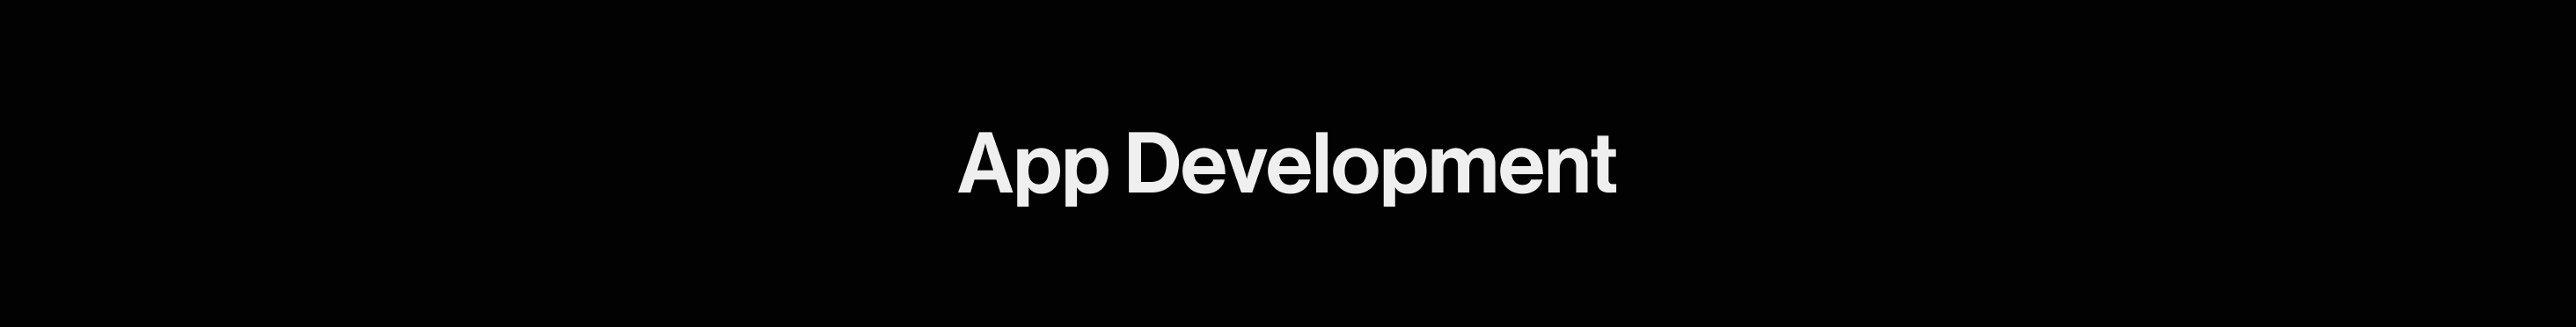 App Development heading.